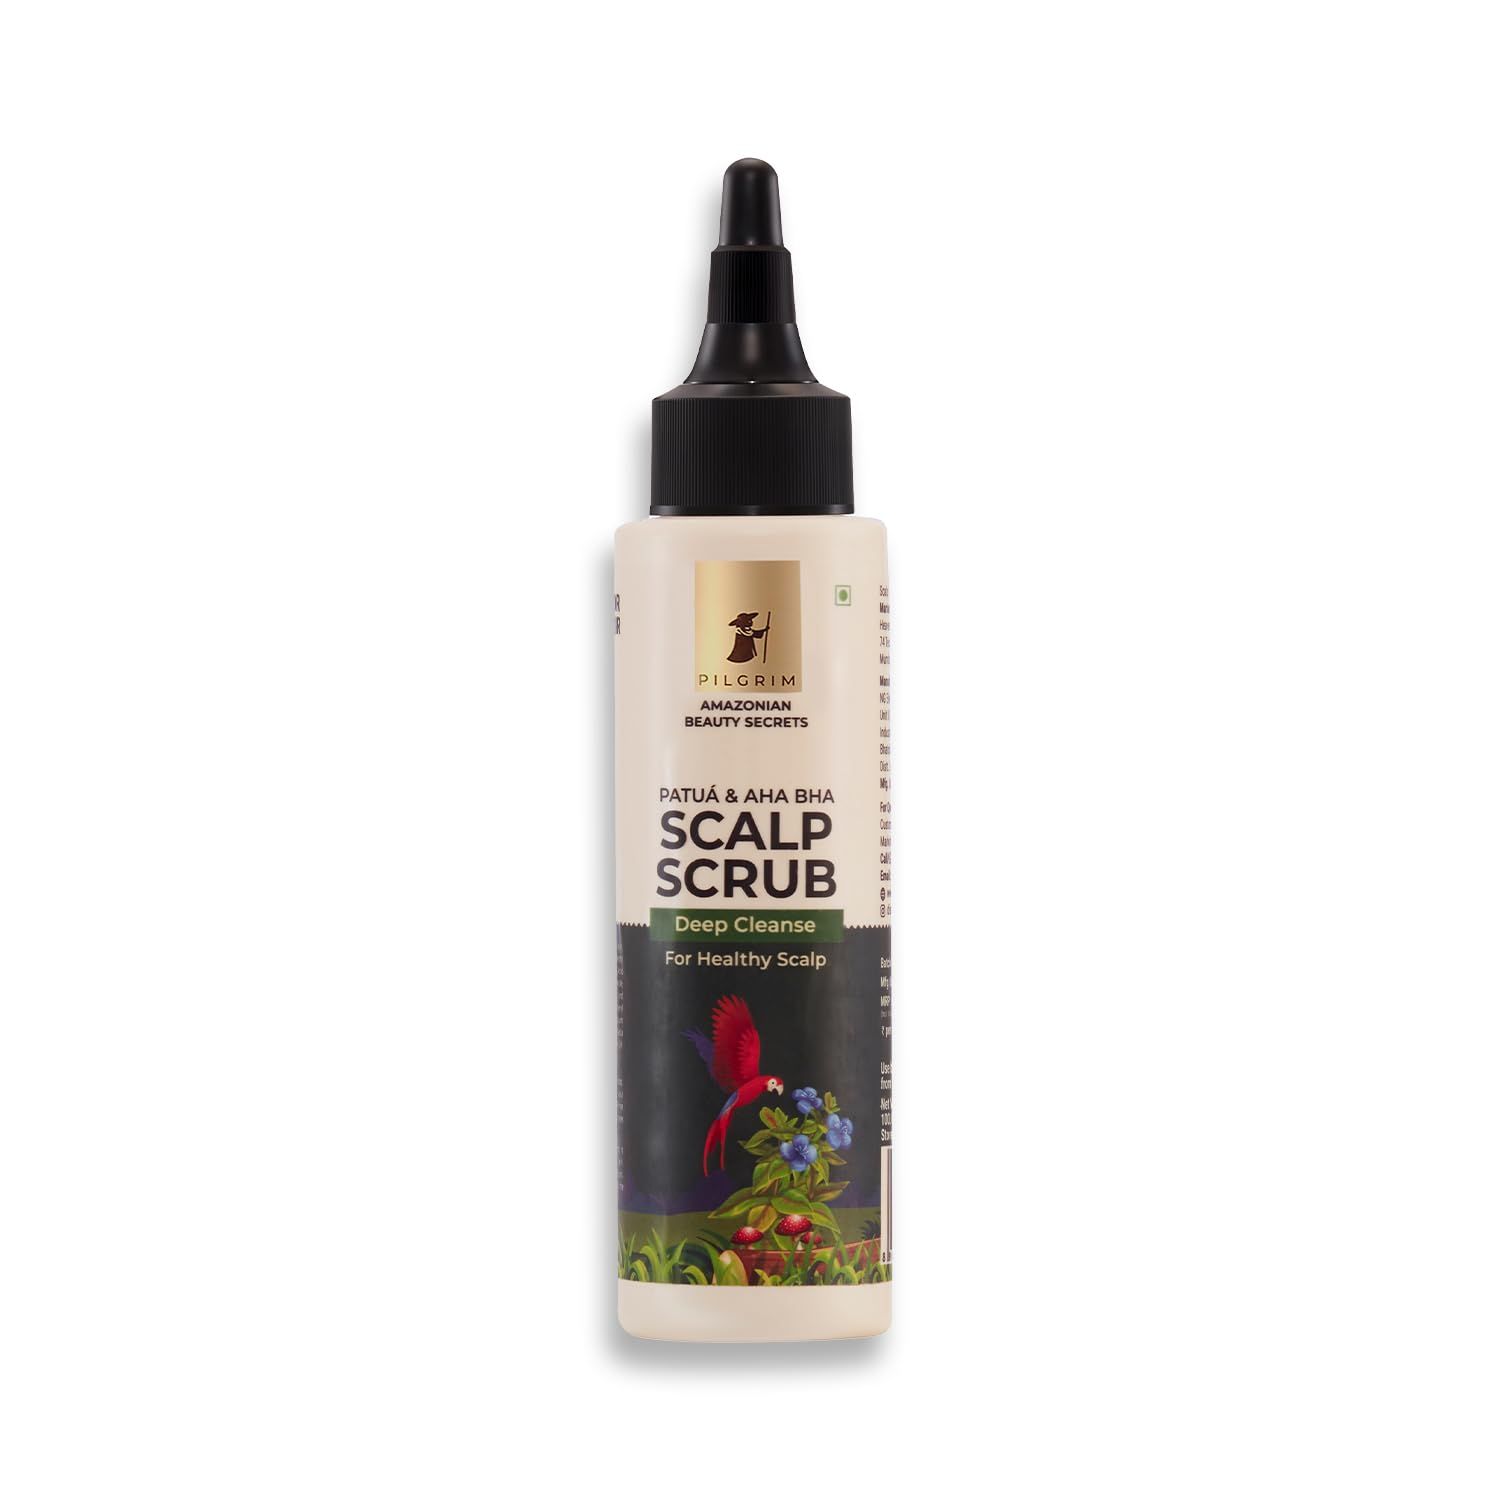 PILGRIM Amazonian Patu� & Aha Bha SCALP SCRUB for women & men | Deep cleanse for healthy scalp | Gentle Exfoliating Scrub To Prevent Product Build-up | Silicon free | 100 ml